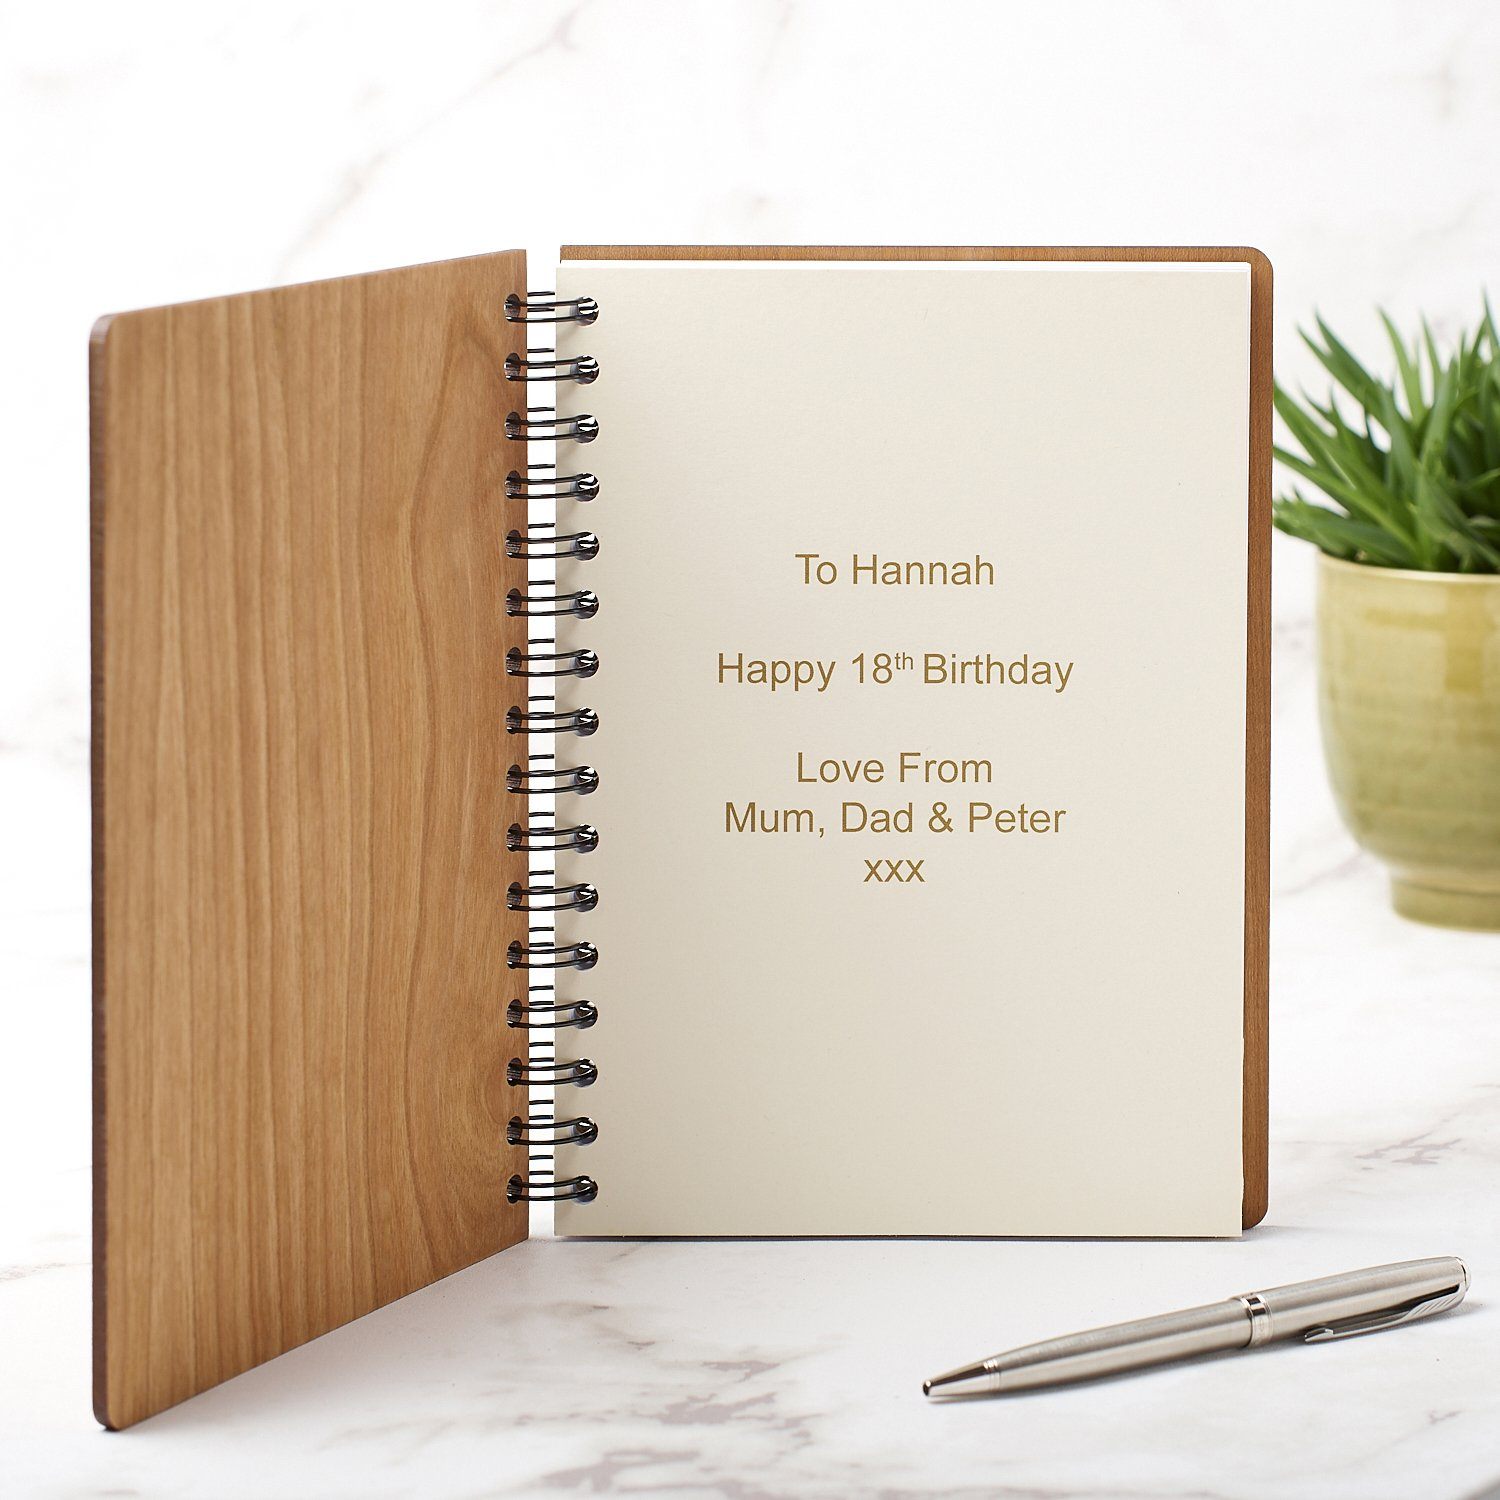 Notebook Planner - Personalised A5 Memorial Service Guest Book - Memorial Guest Book Design